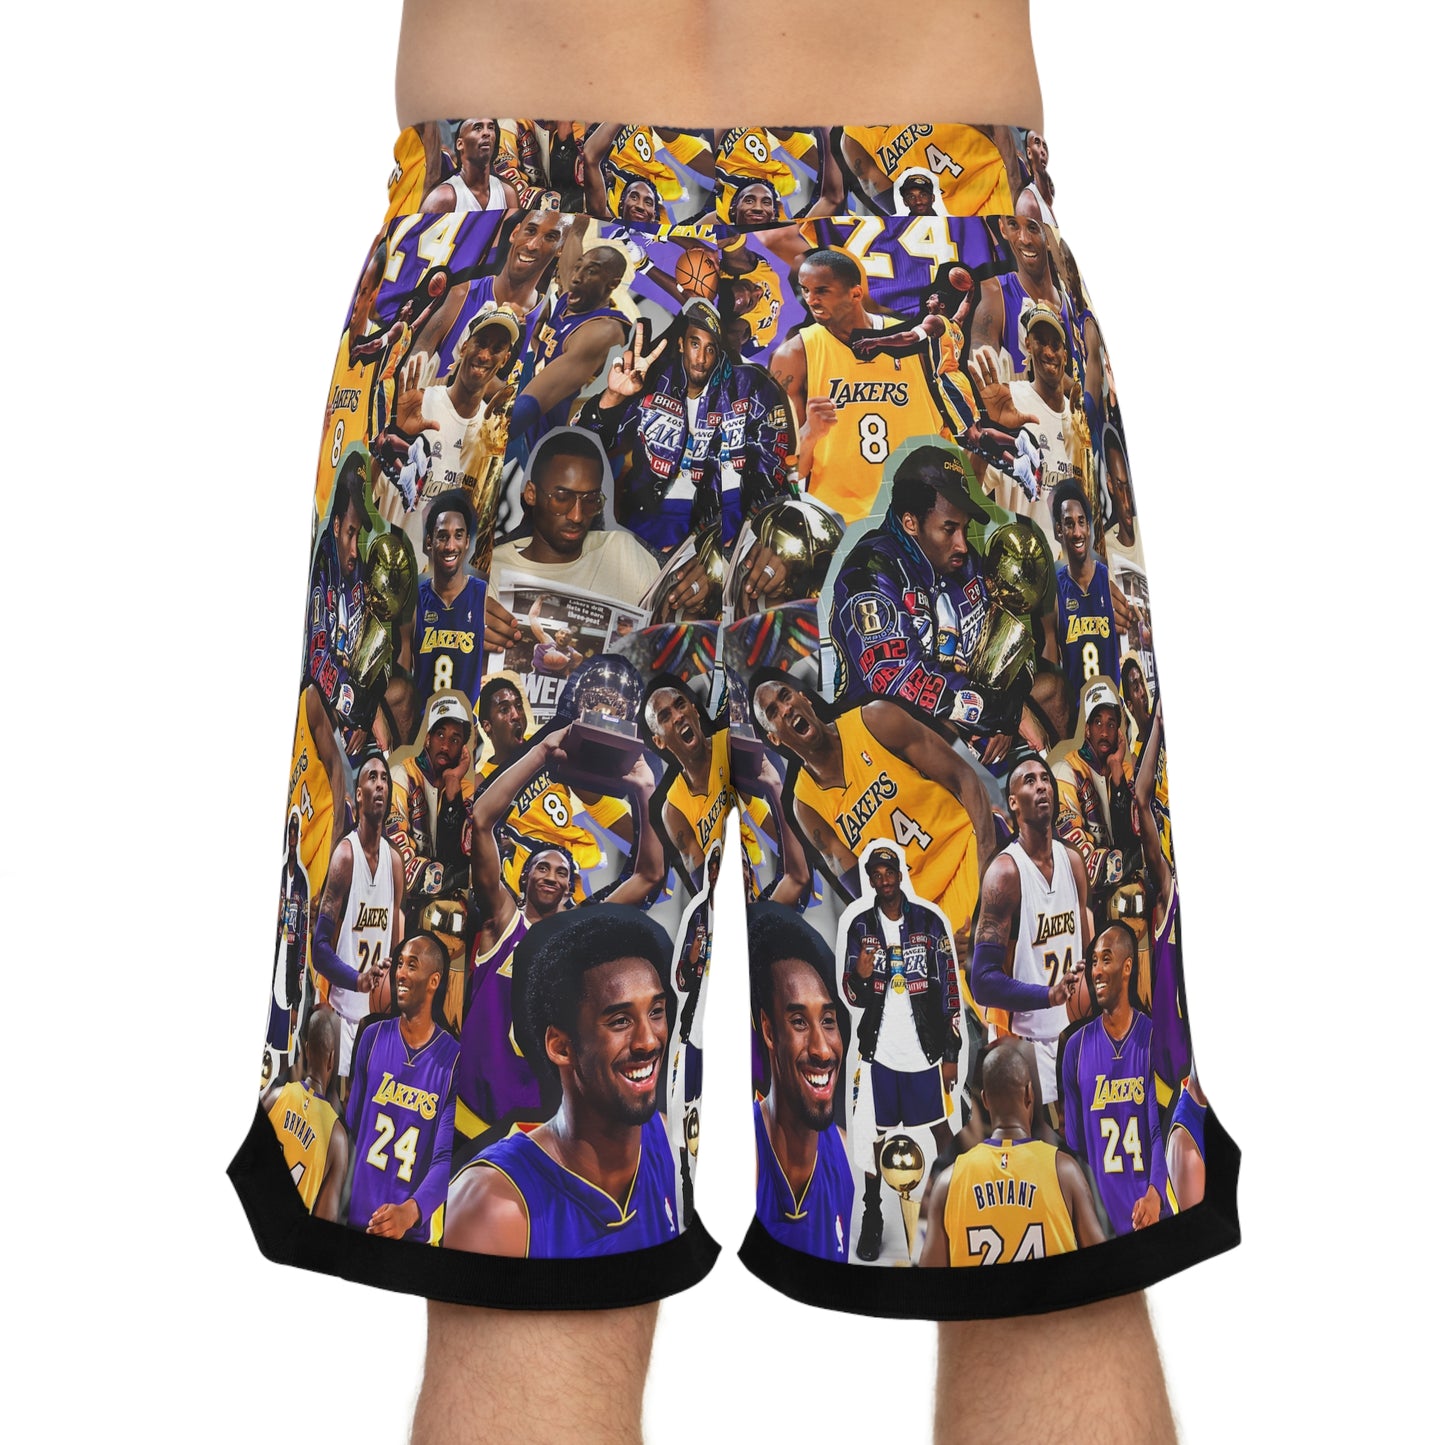 Kobe Bryant Career Moments Photo Collage Basketball Rib Shorts